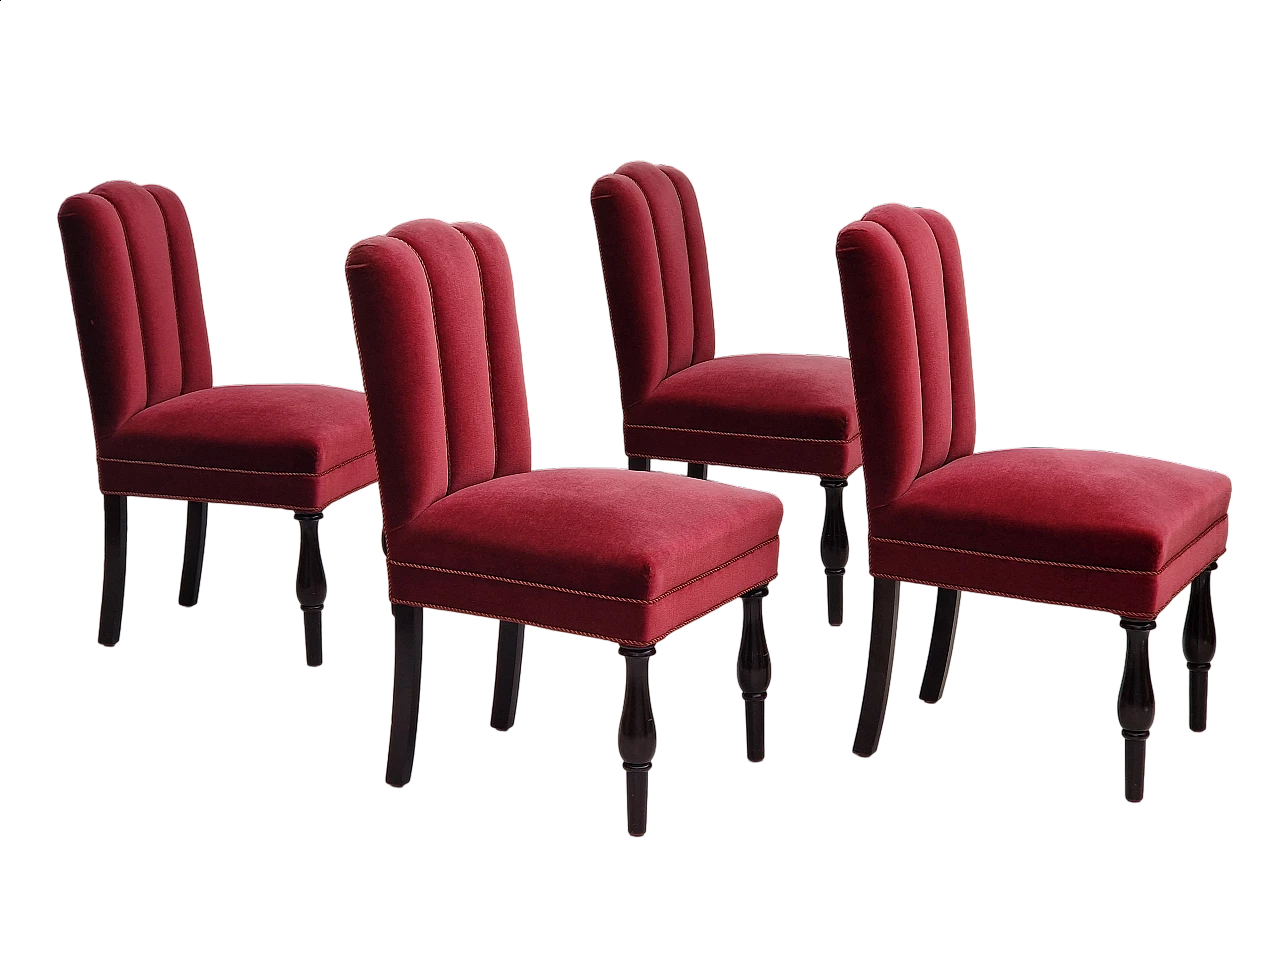 4 Danish oak chairs with cherry red velvet upholstery, 1950s 26